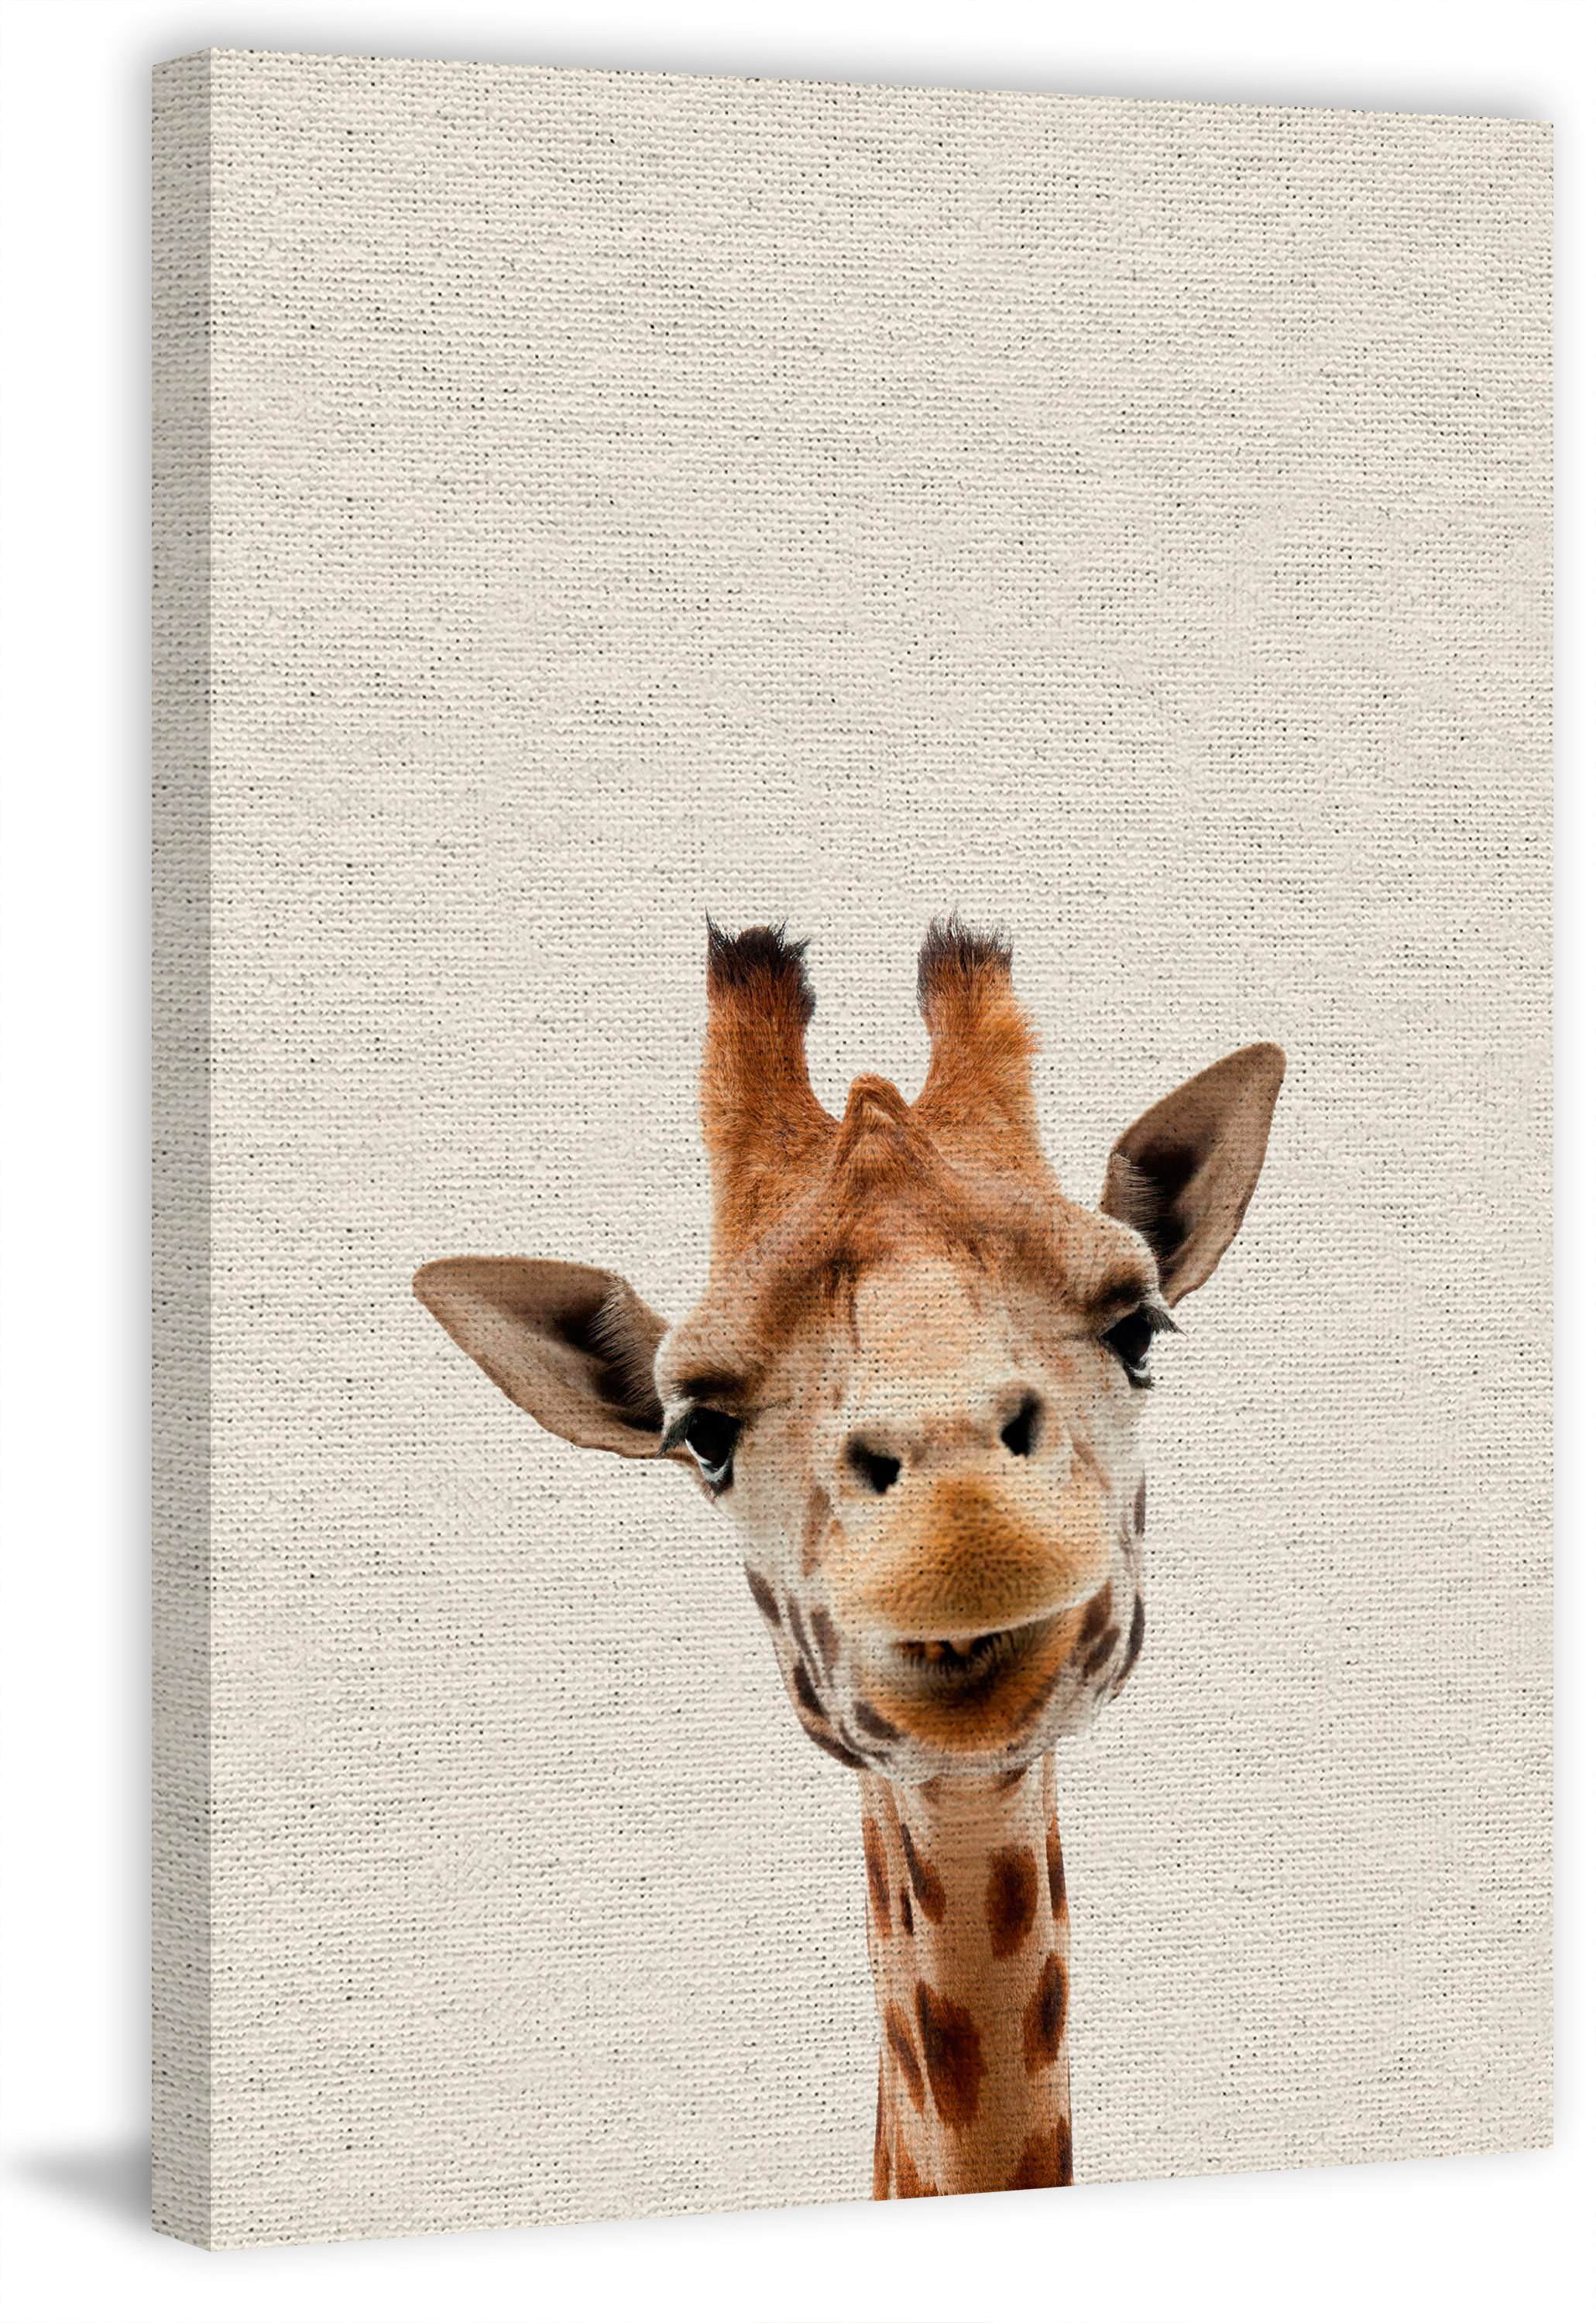 Curious Giraffe on Wrapped Canvas - Walmart.com